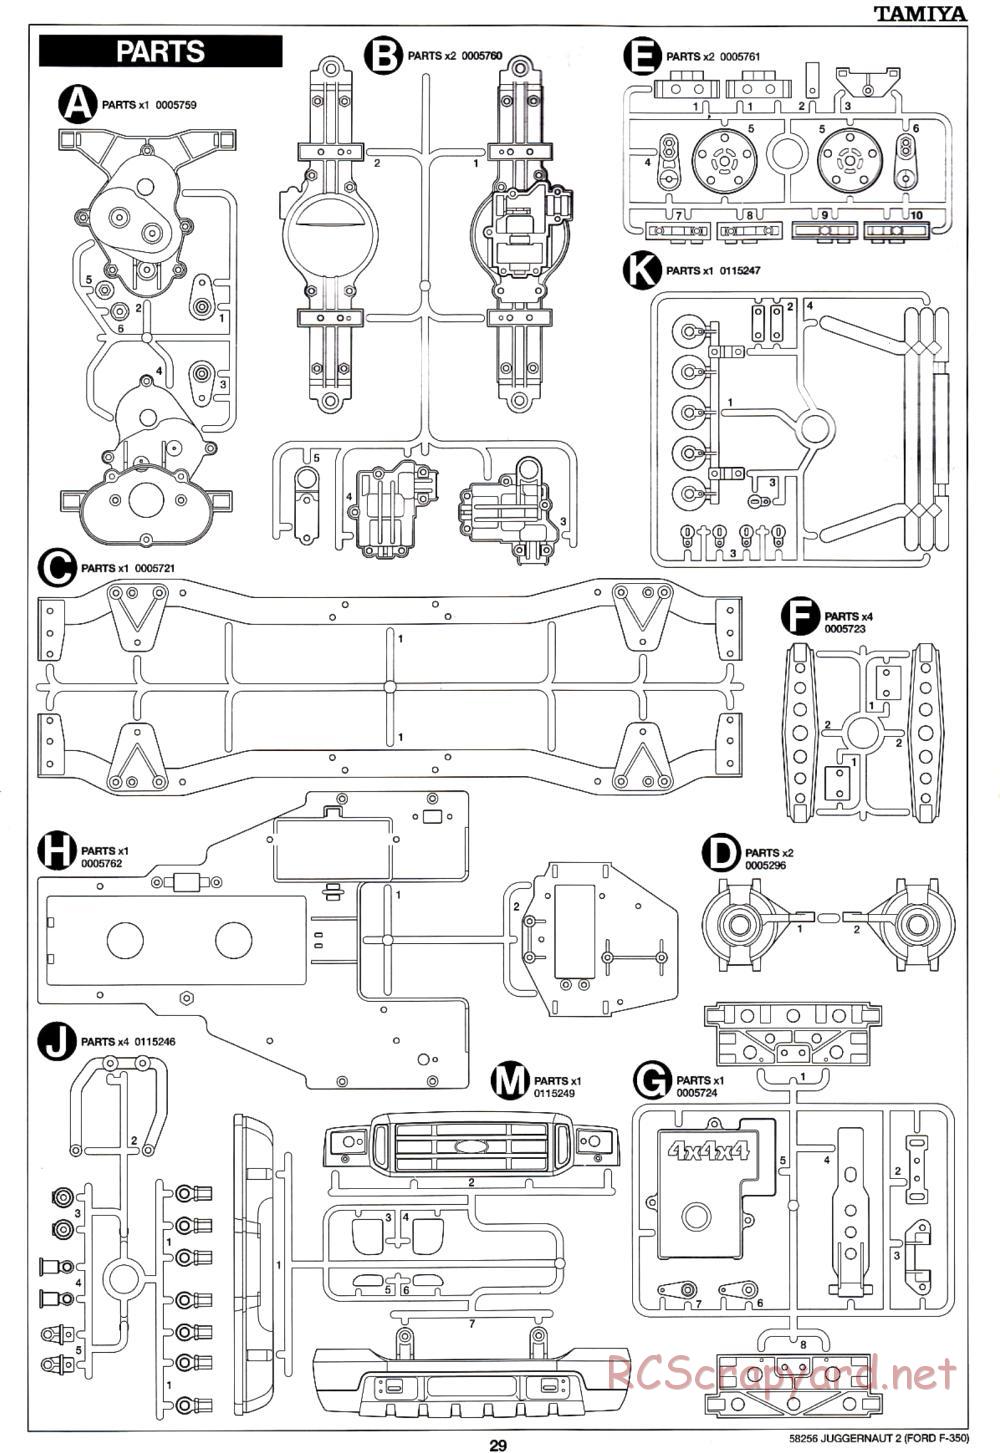 Tamiya - Juggernaut 2 Chassis - Manual - Page 29